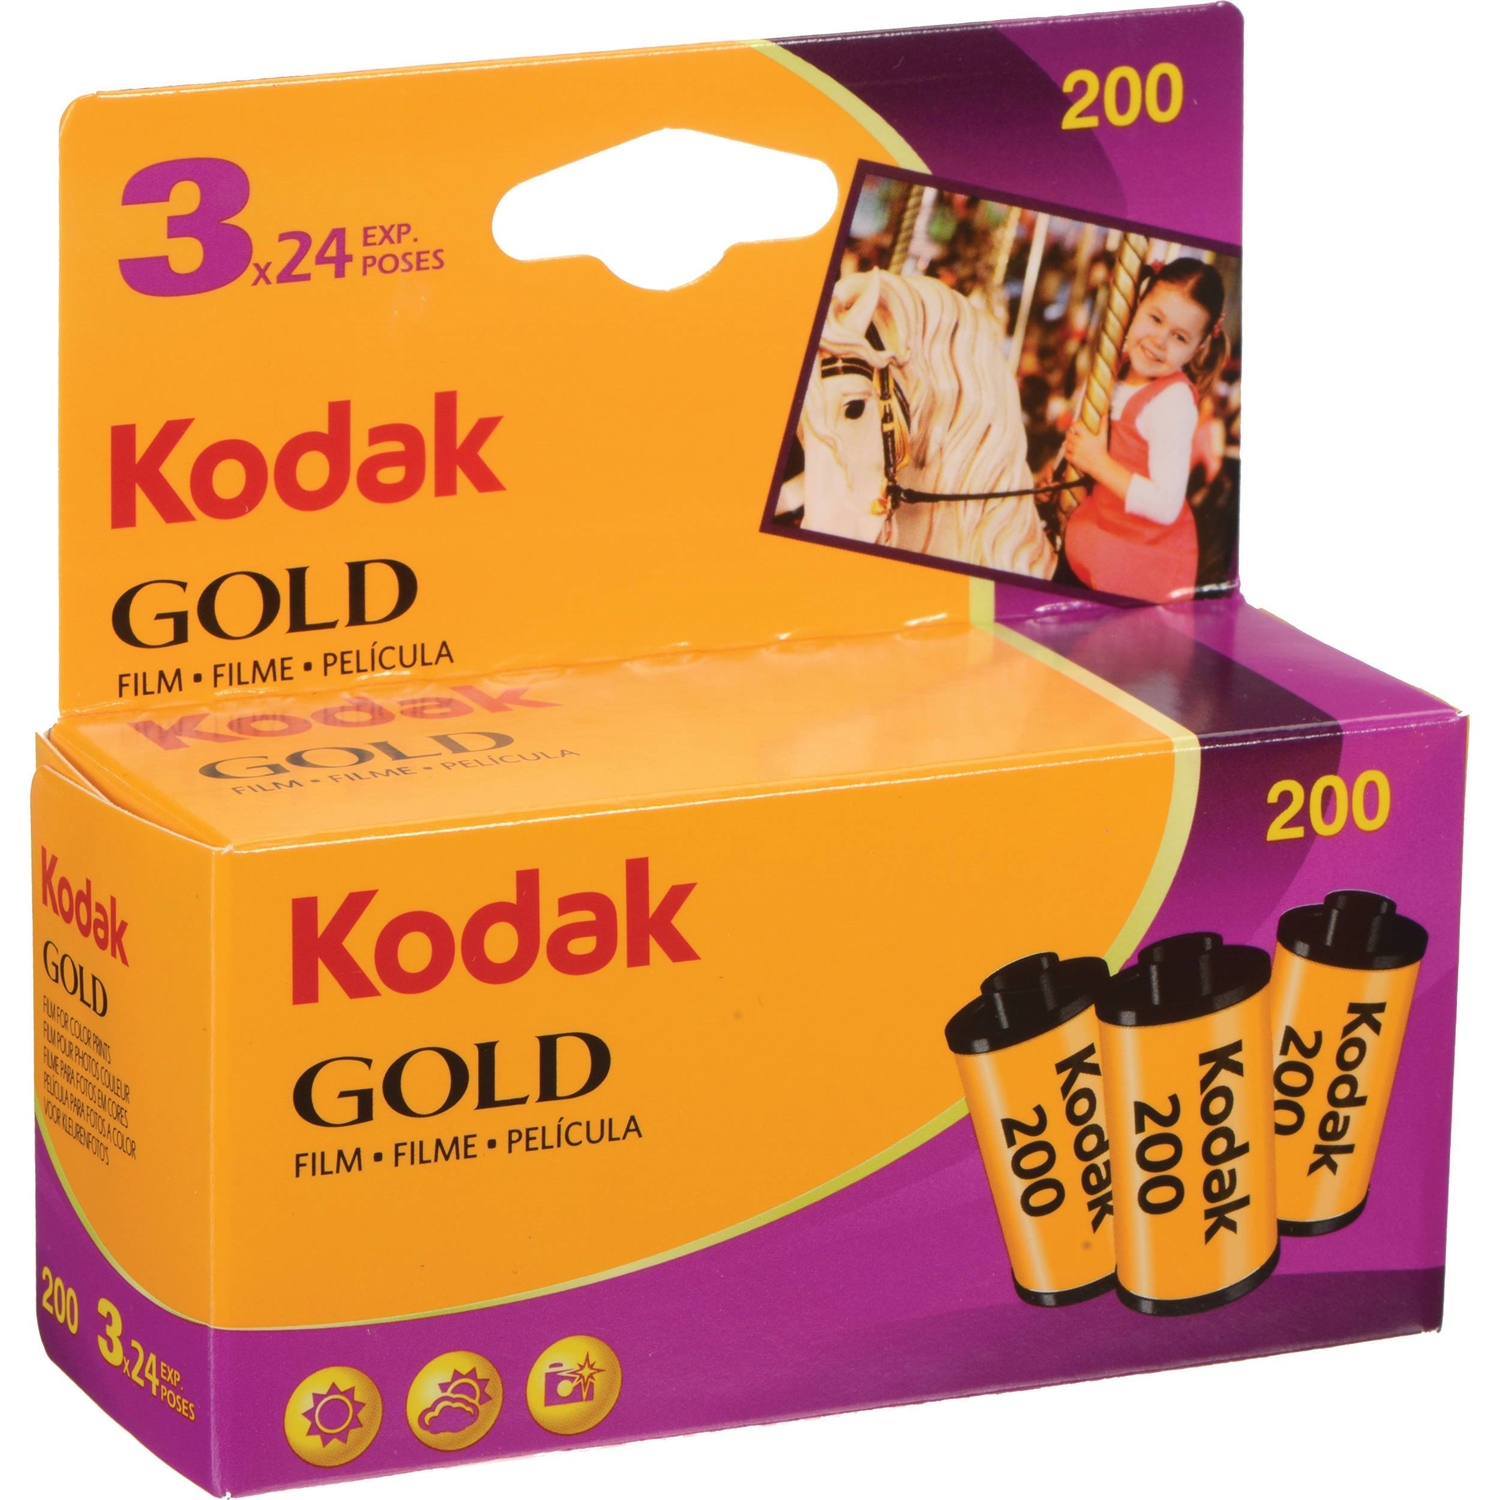 KODAK GOLD 200 35MM 24 EXPOSURES 3 PACK